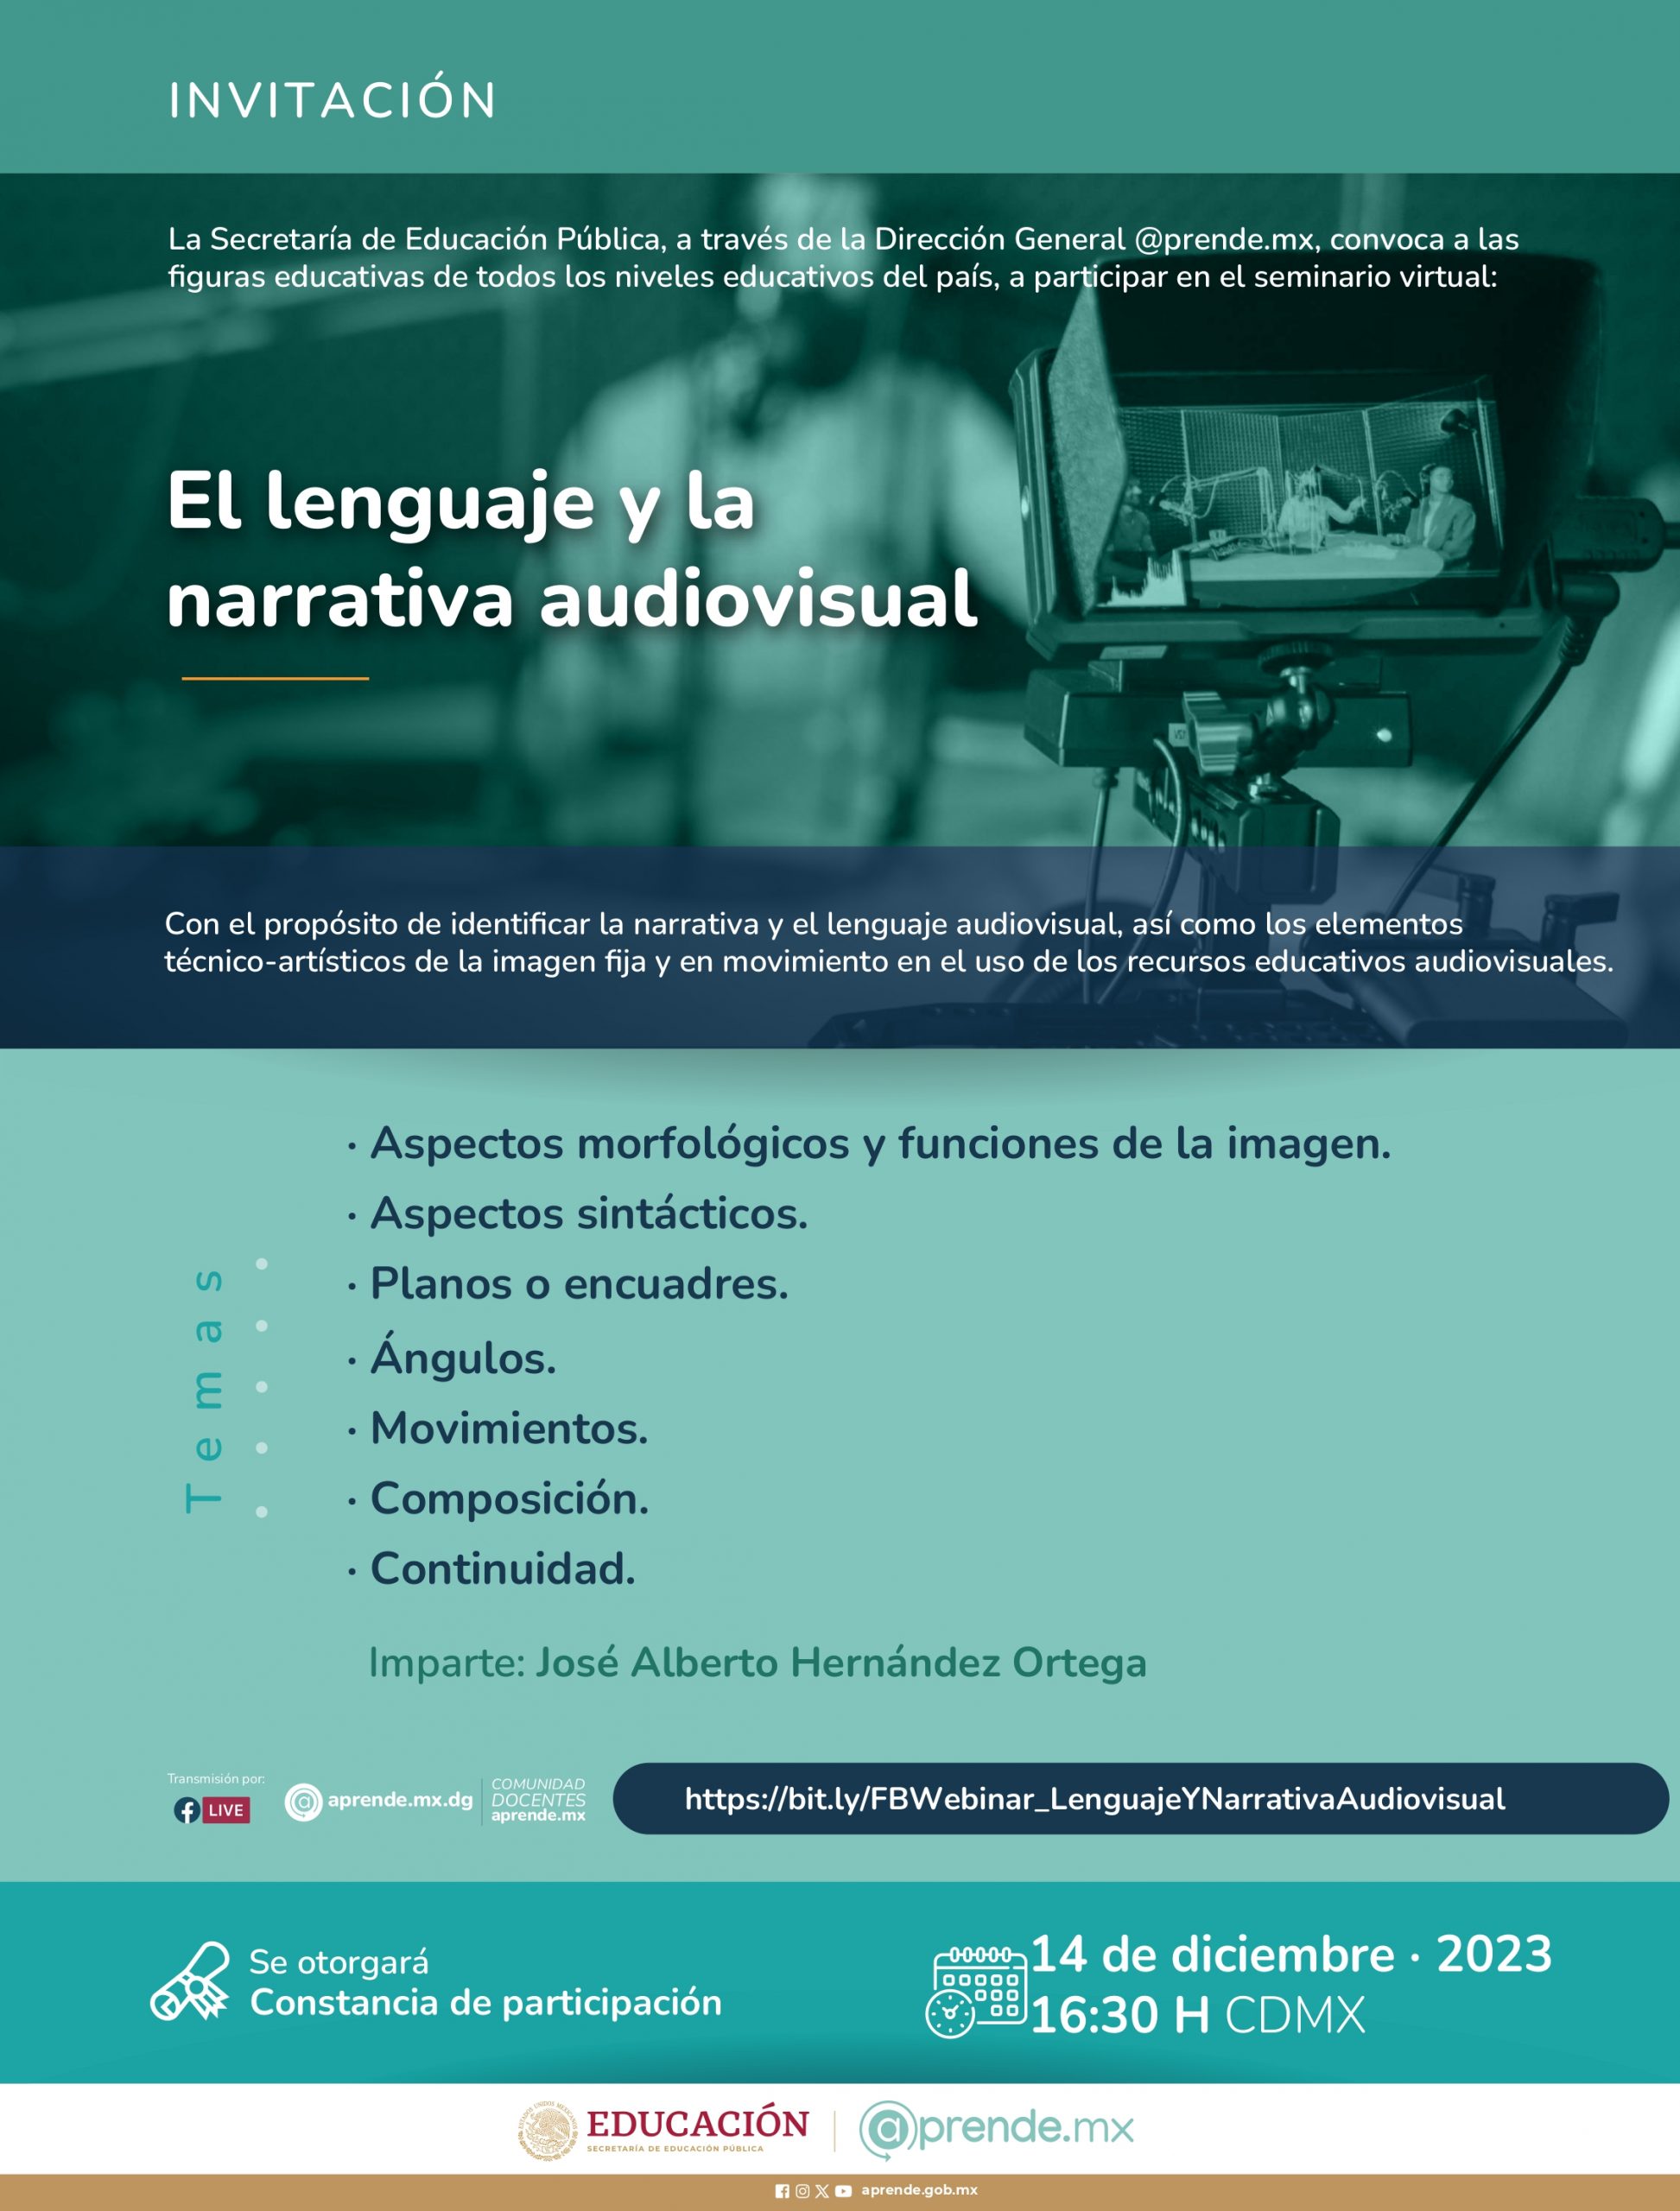 El lenguaje y la narrativa audiovisual